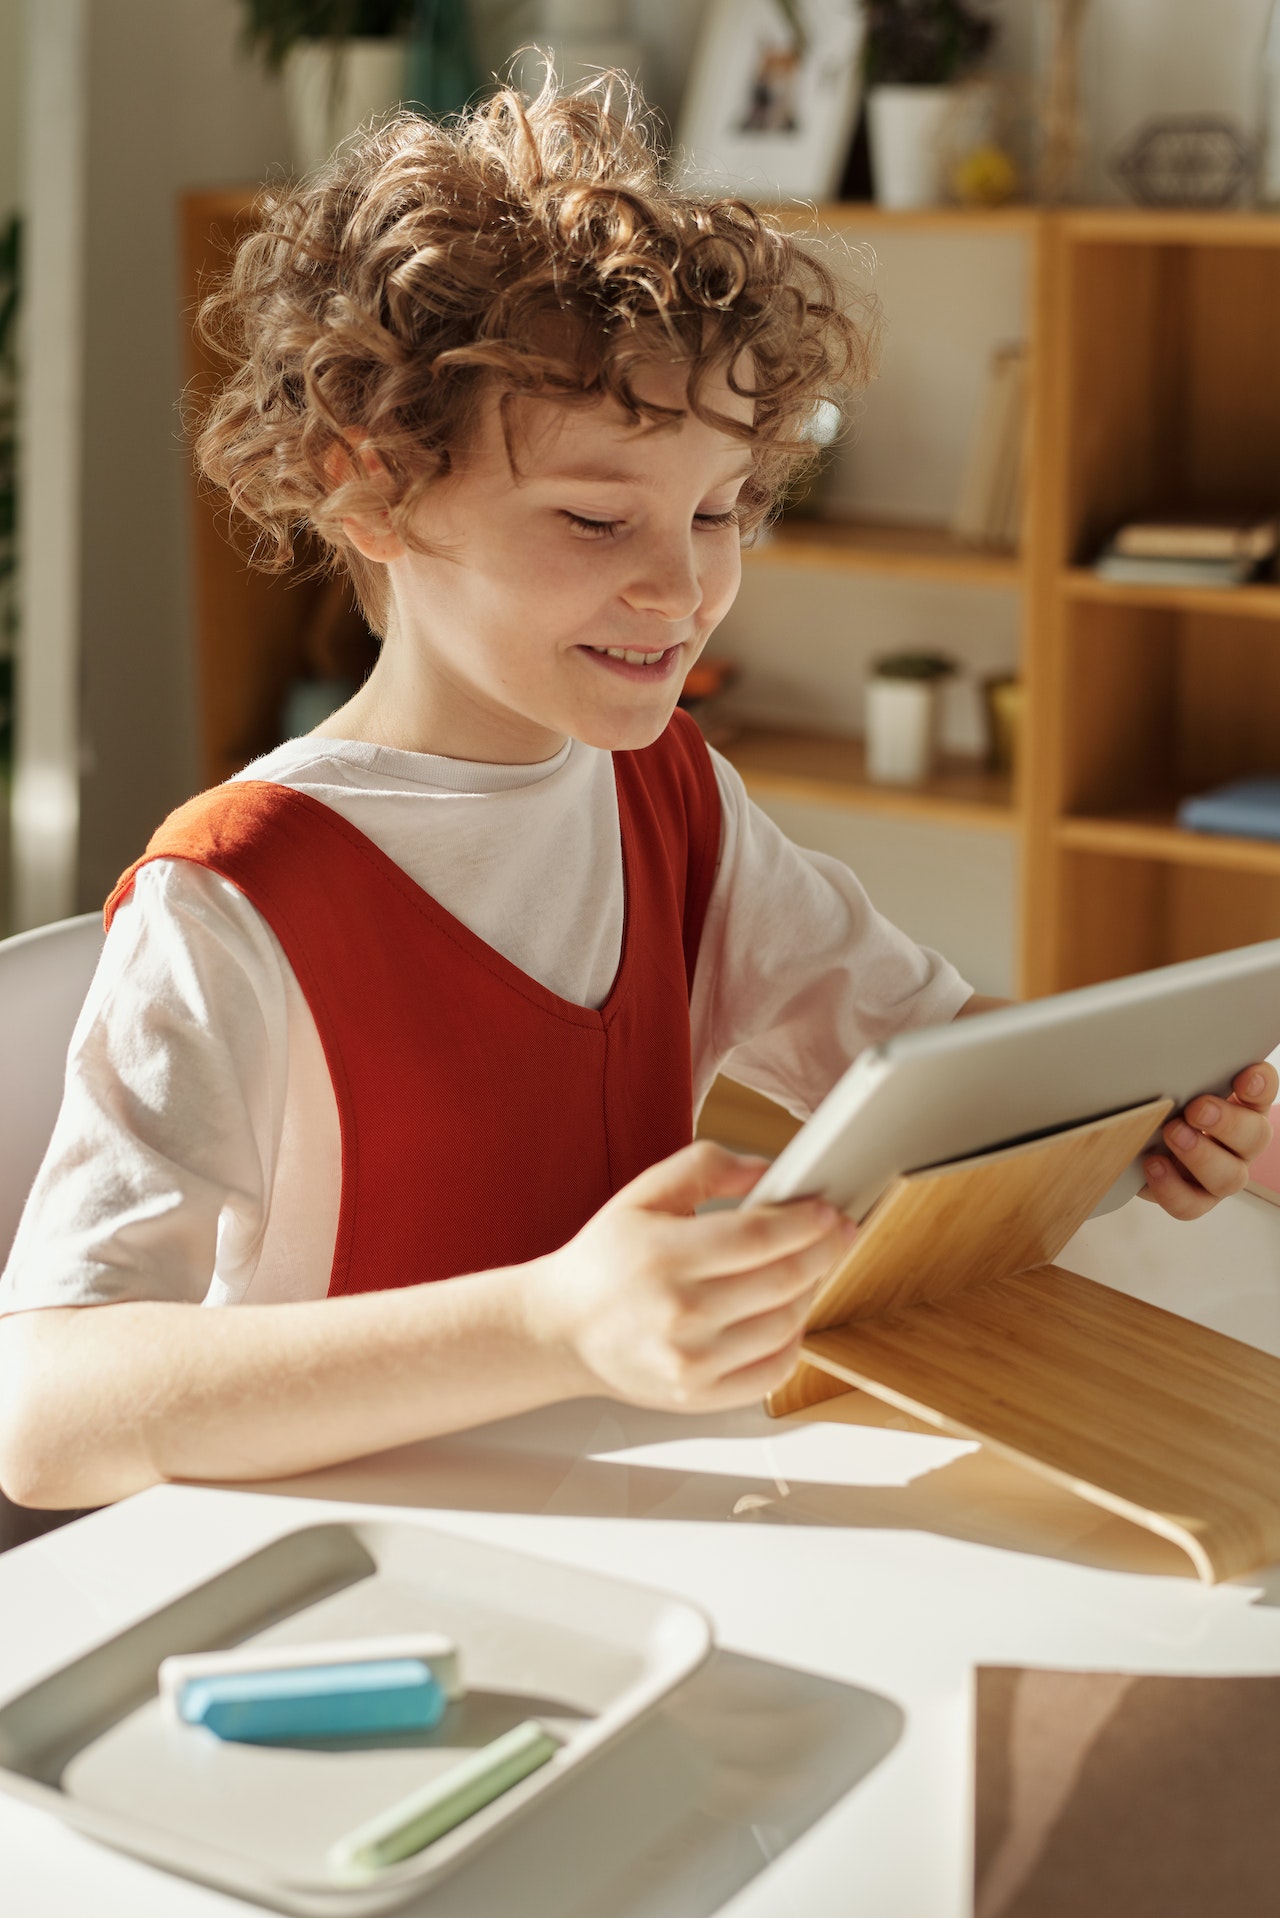 Parental Control on iPad: Setting Boundaries for Safe Usage